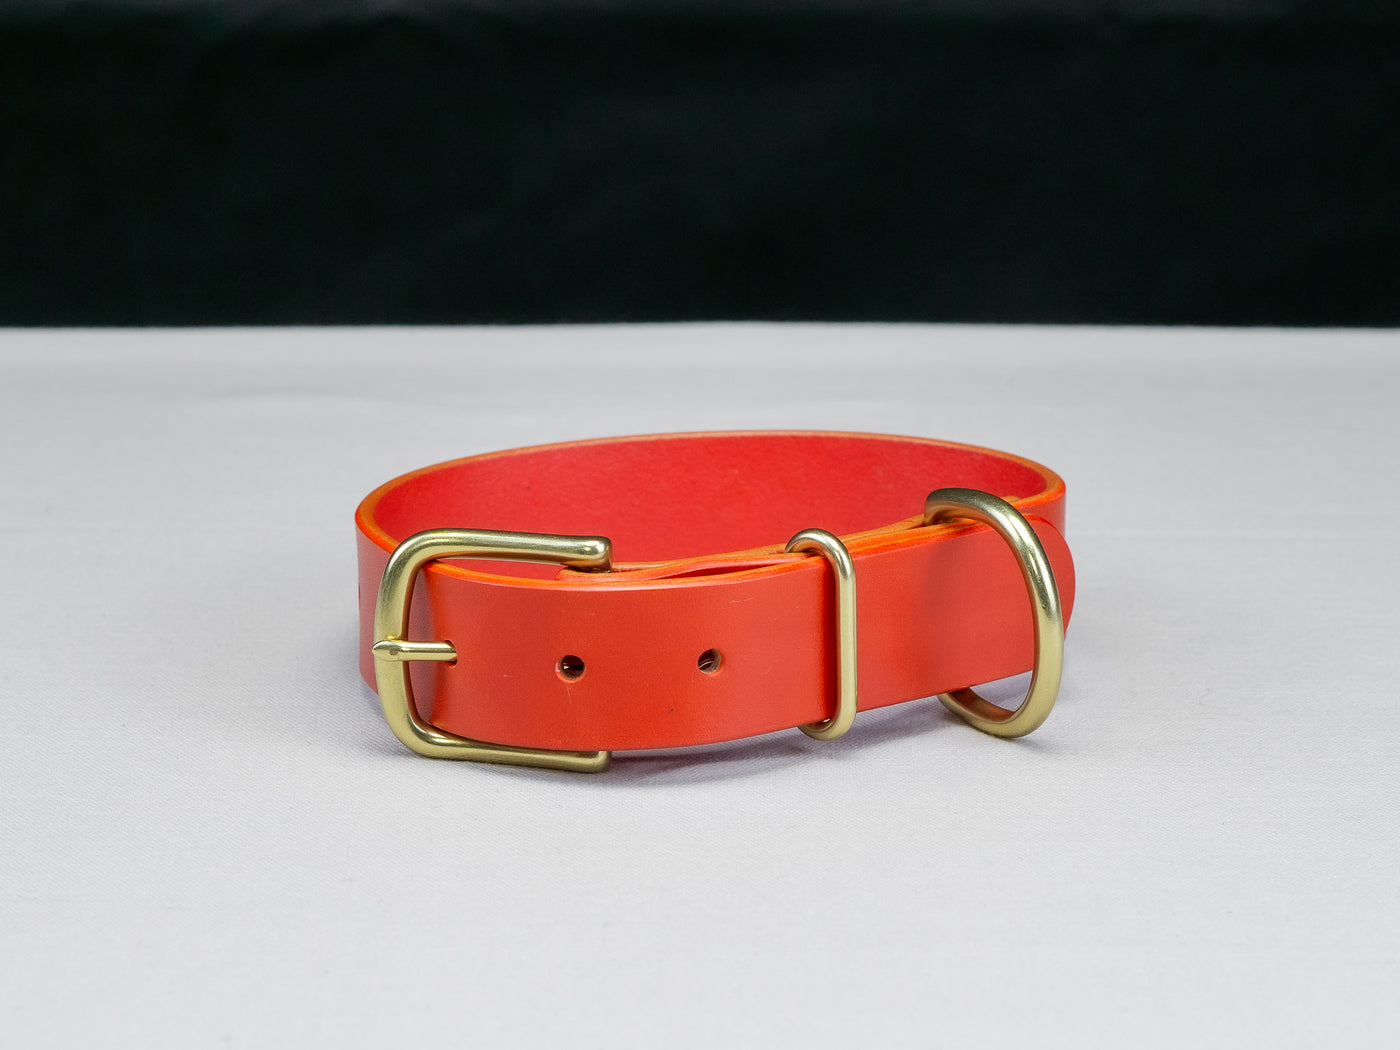 Leather Belt Dog Collar - Chili Pepper Red English Bridle Leather - Atlas Leathercraft - Handmade Australian Leather Goods